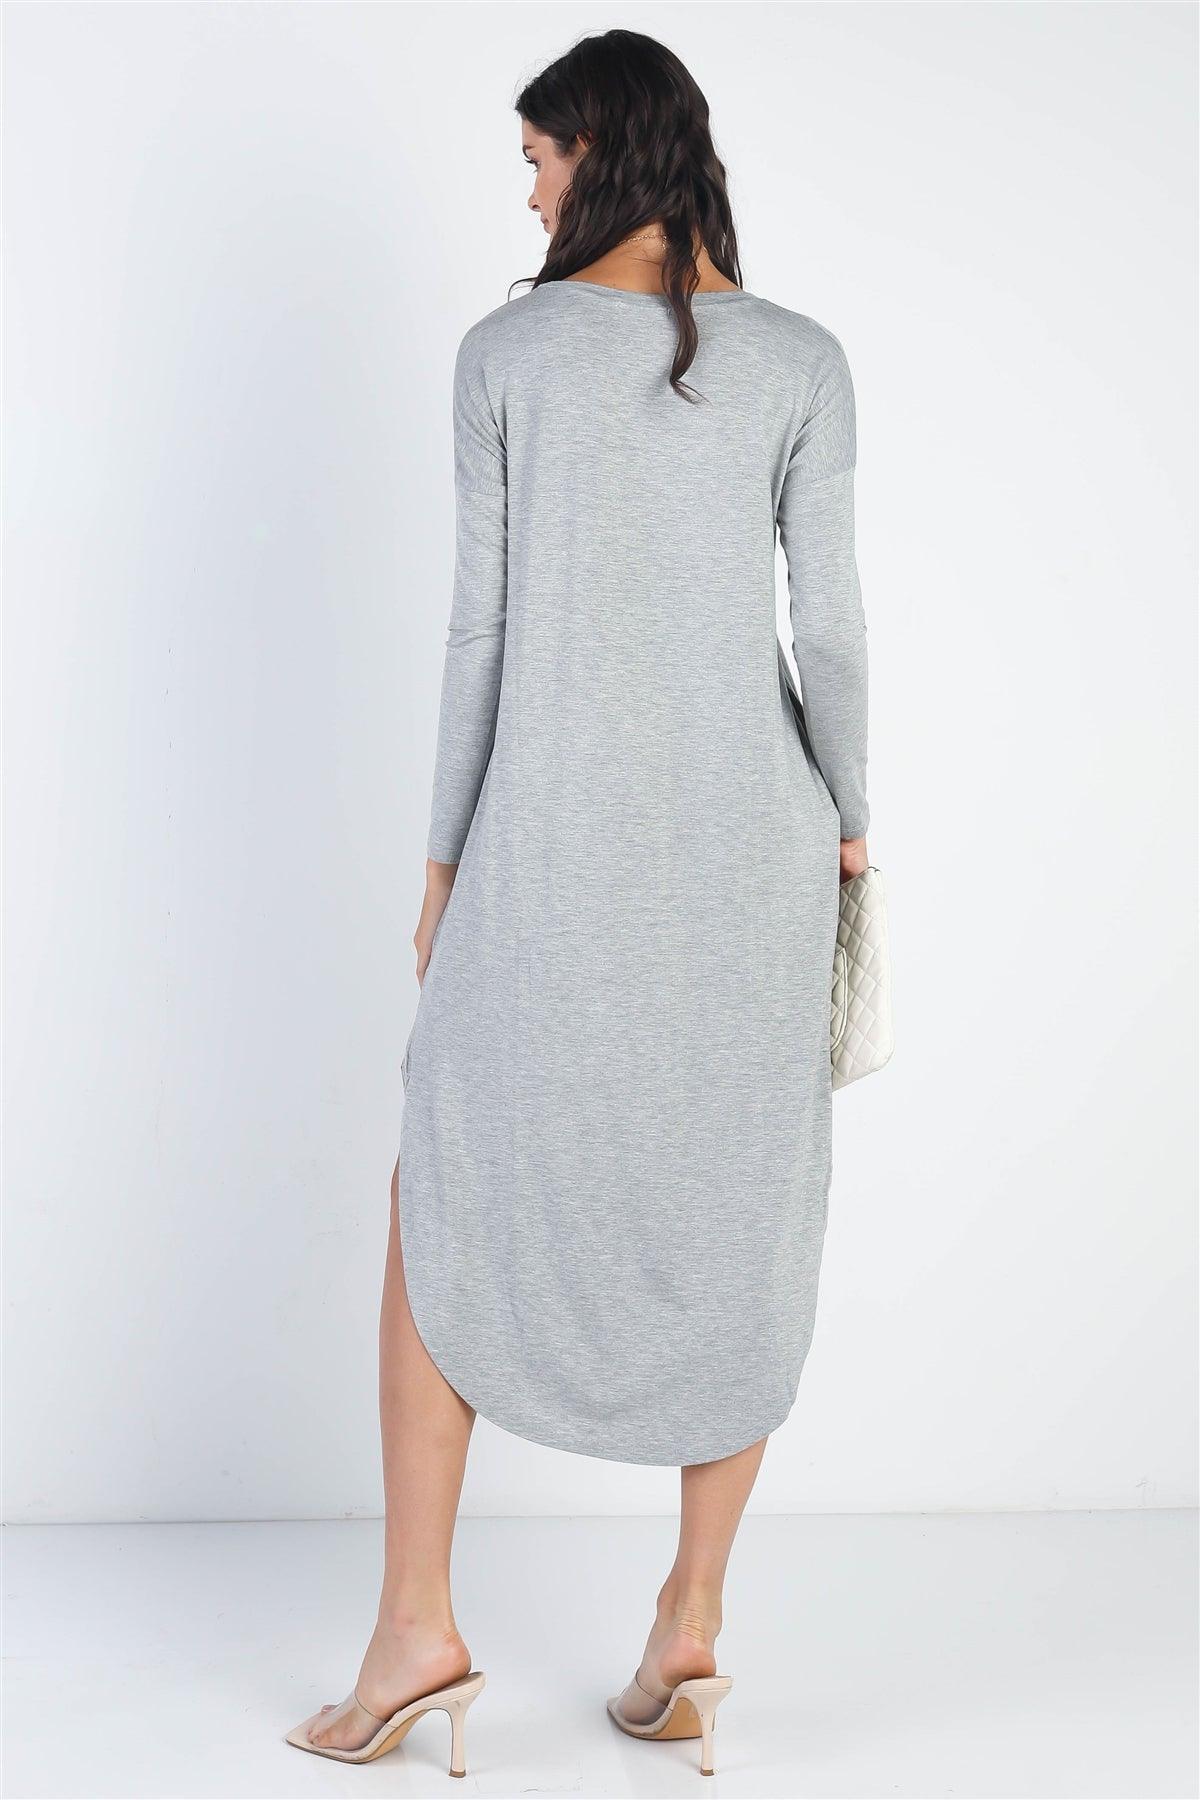 Heather Grey Long Sleeve Midi Dress /1-1-1